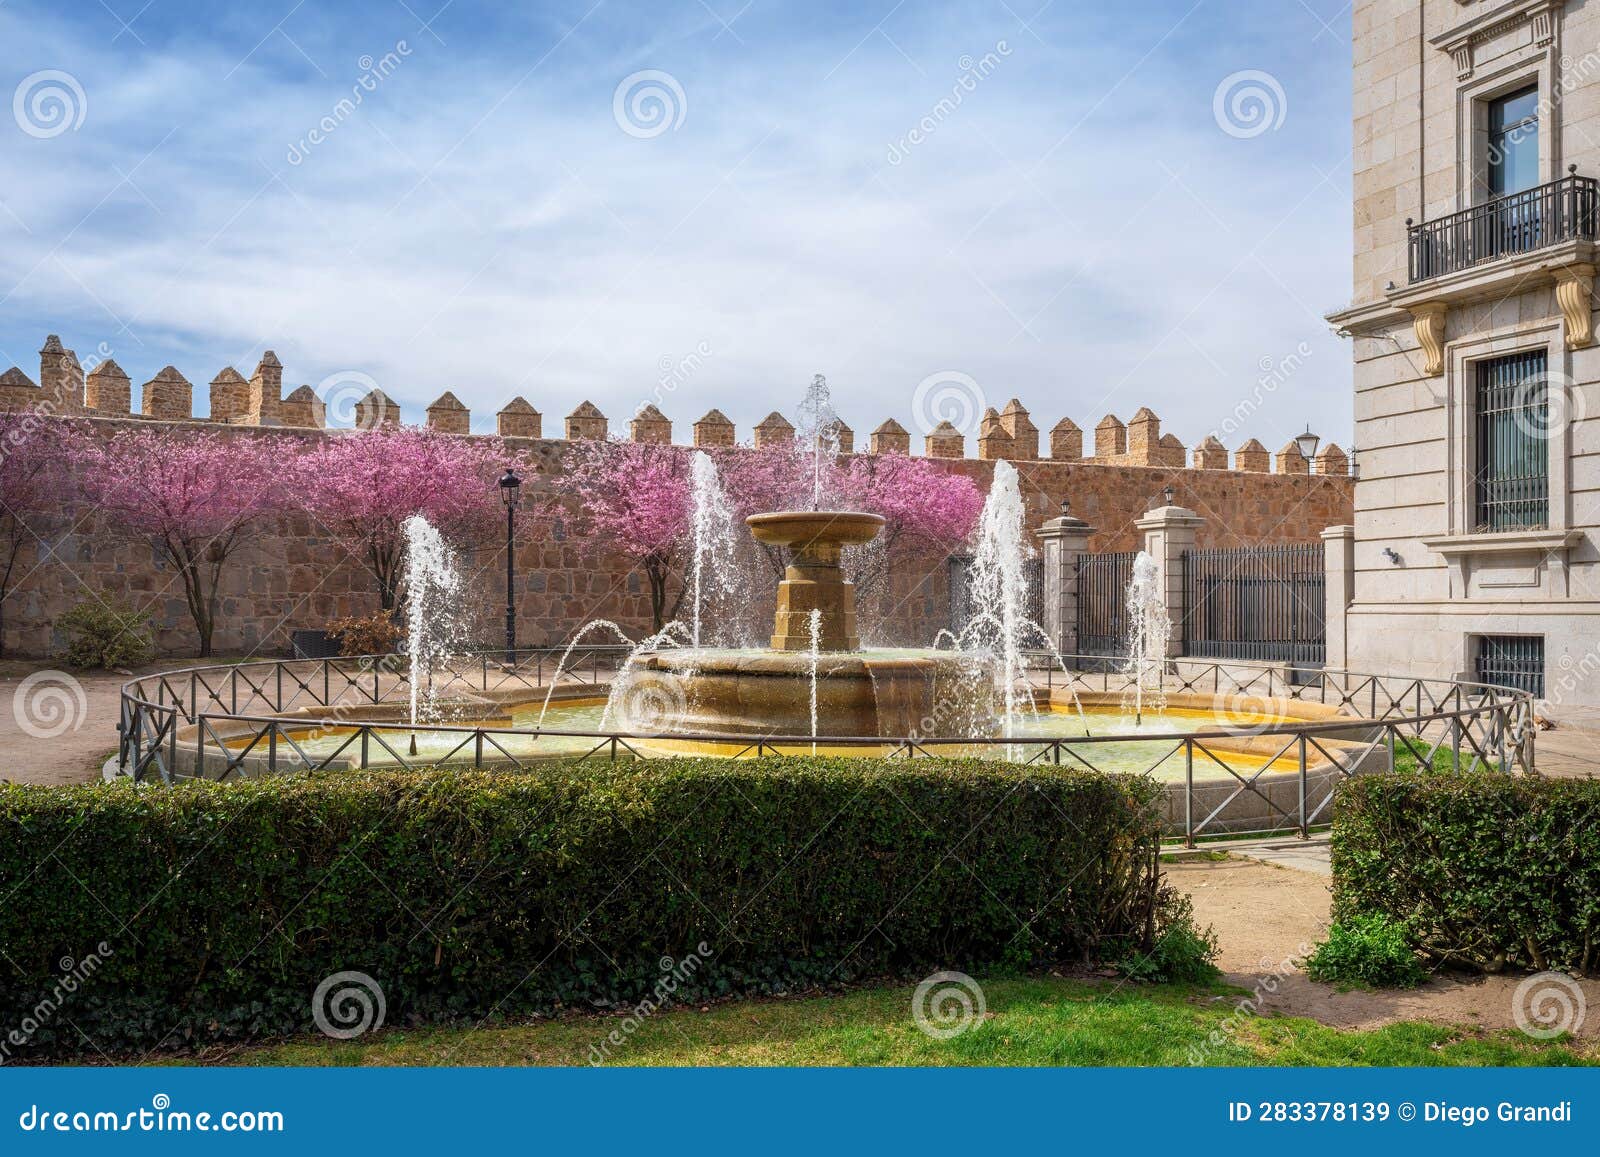 fountain at plaza adolfo suarez square - avila, spain